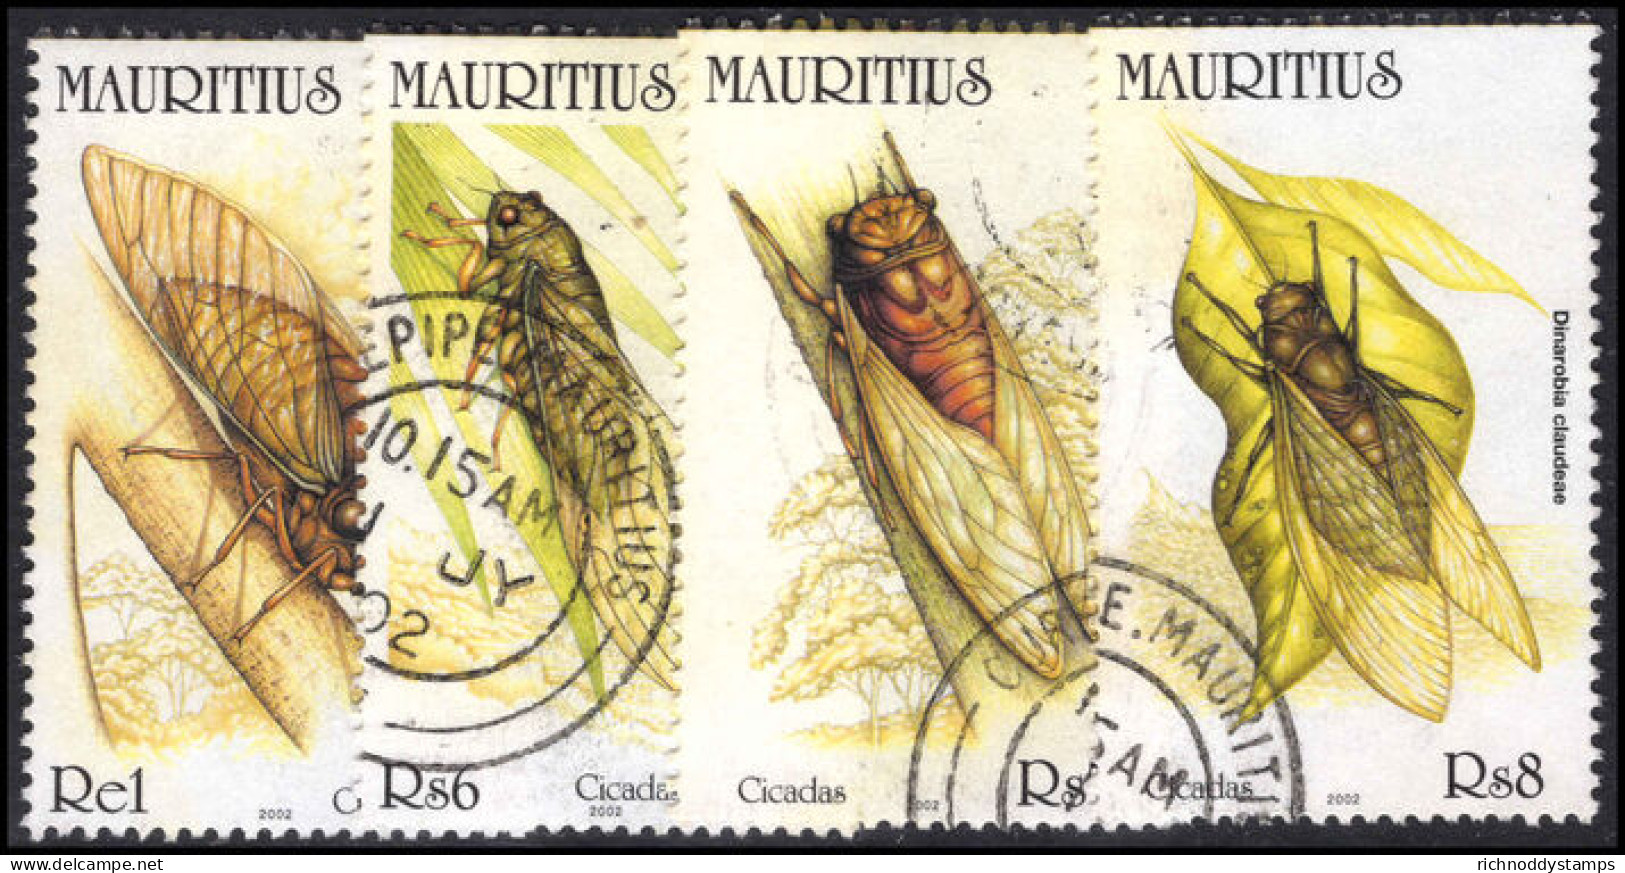 Mauritius 2002 Cicadas Fine Used. - Mauritius (1968-...)